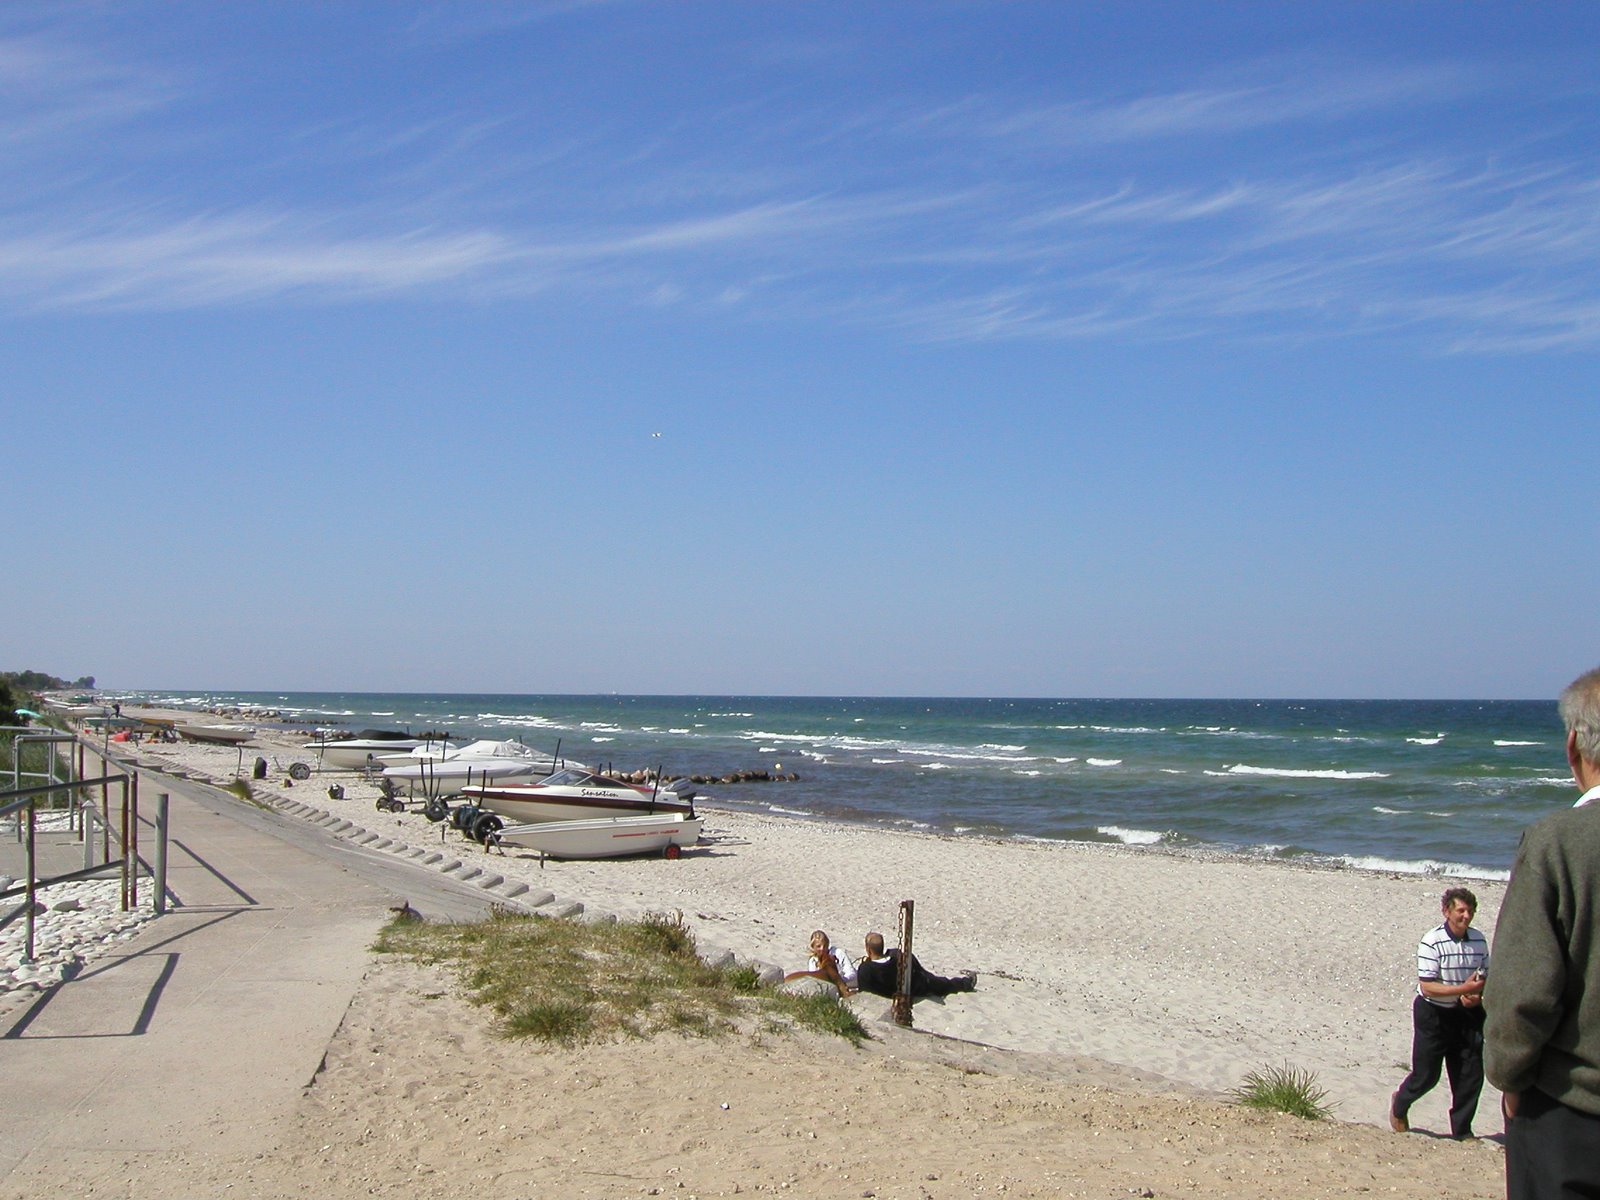 Foto de Hasmark Beach - lugar popular entre os apreciadores de relaxamento